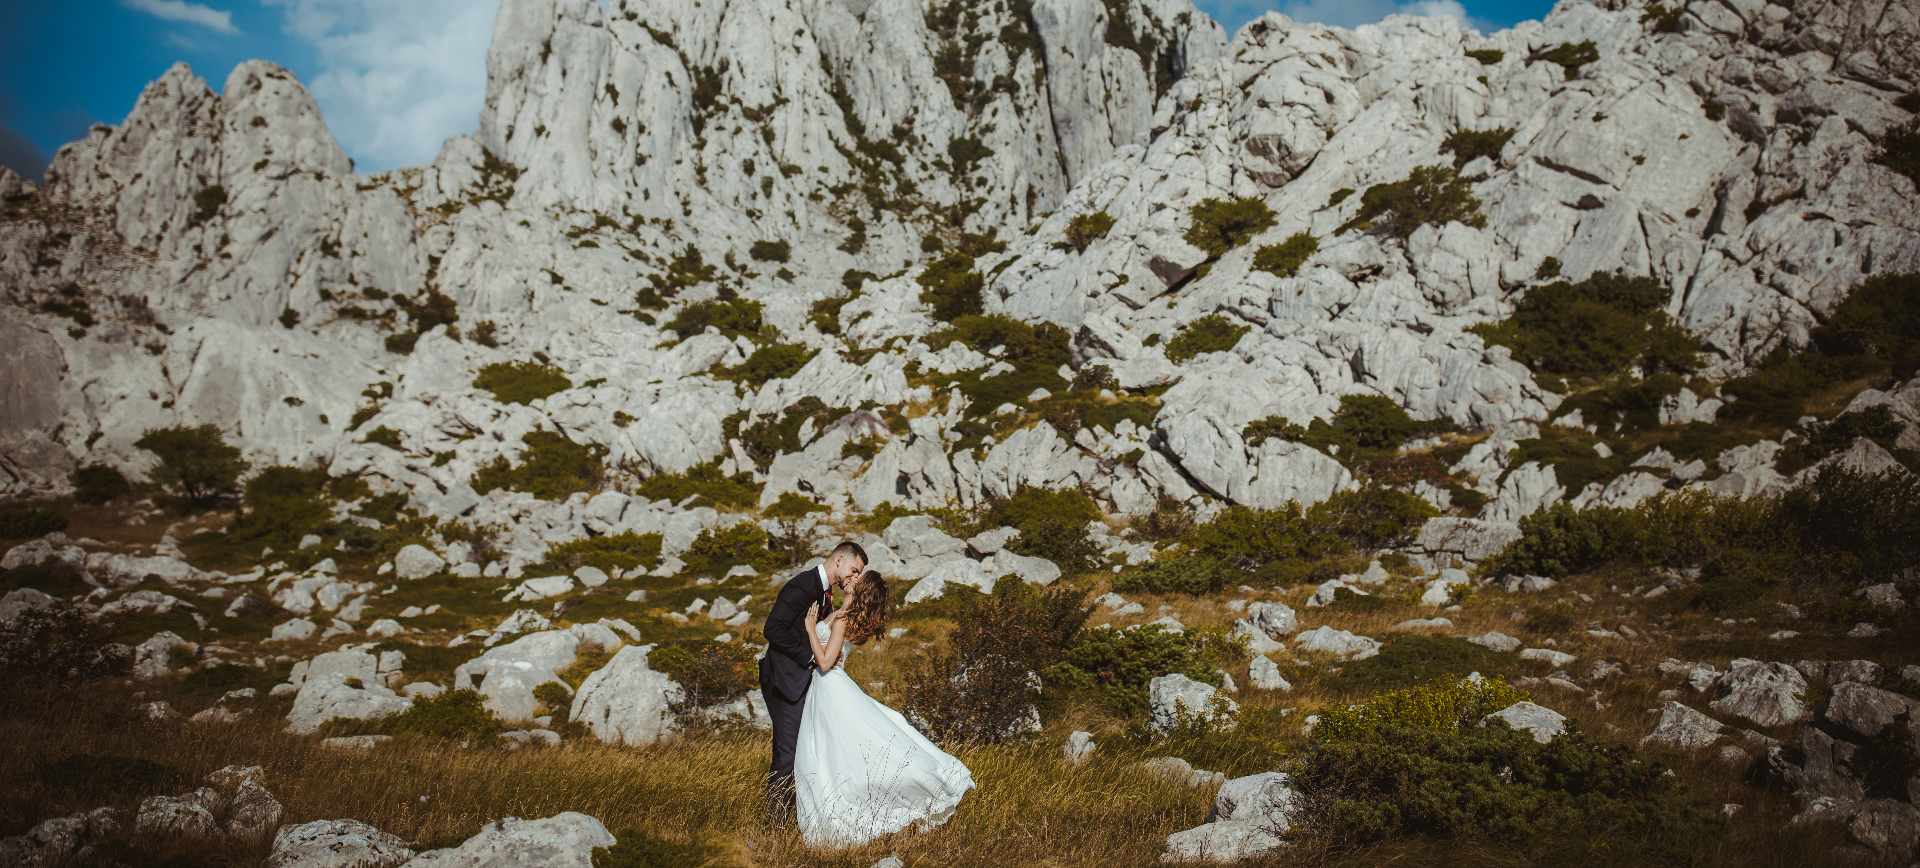 hiking wedding elopement croatia